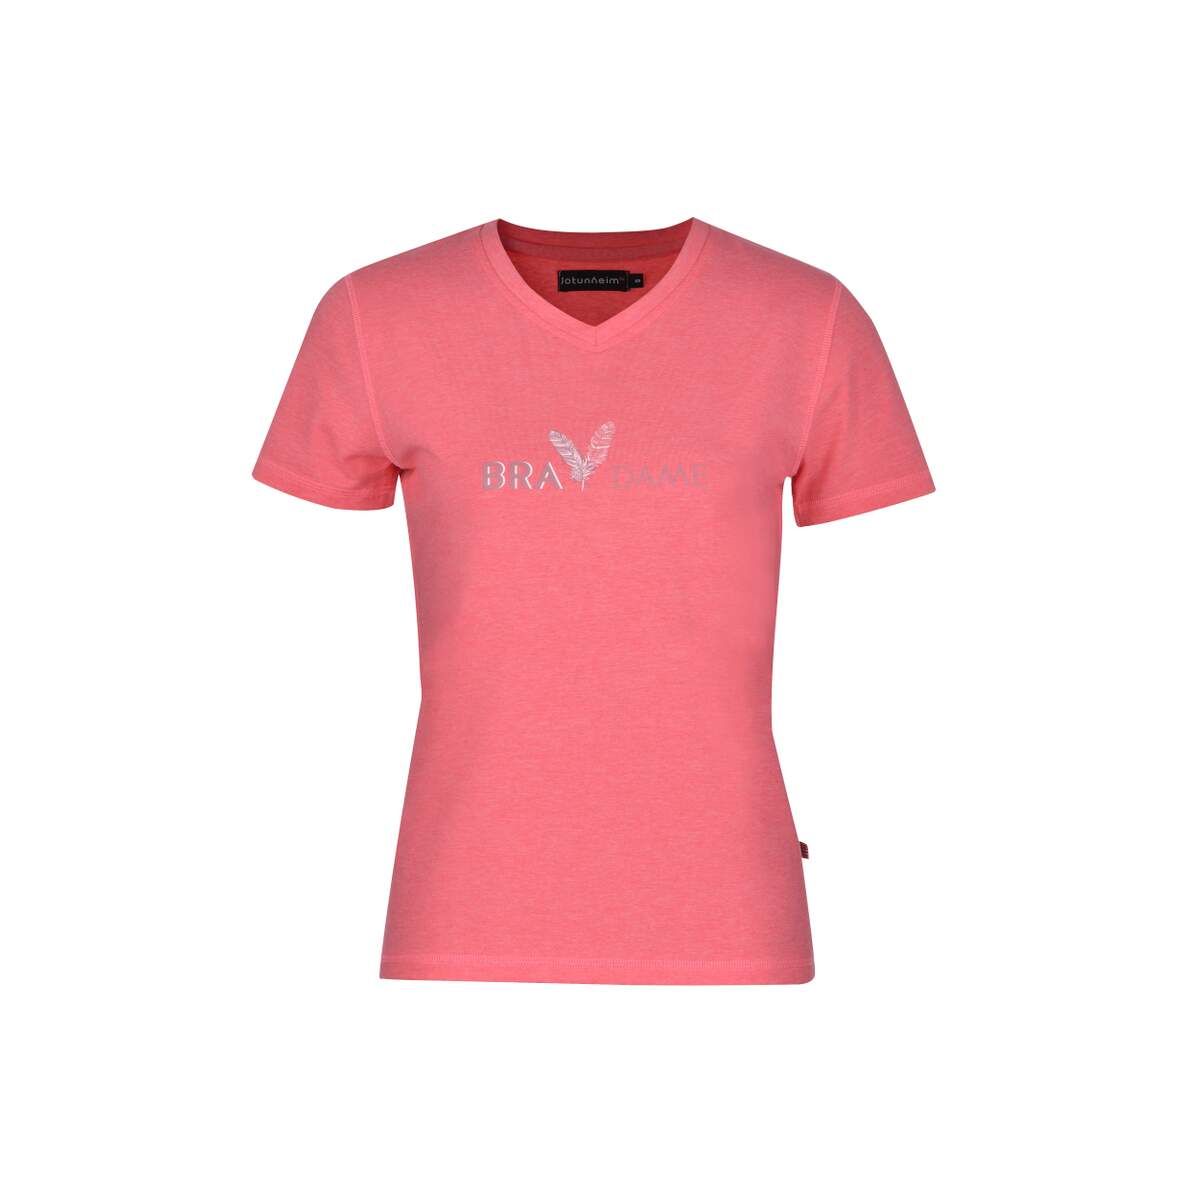 jotunheim-varde-t-shirt-m-print-dame-brasunkist-coral